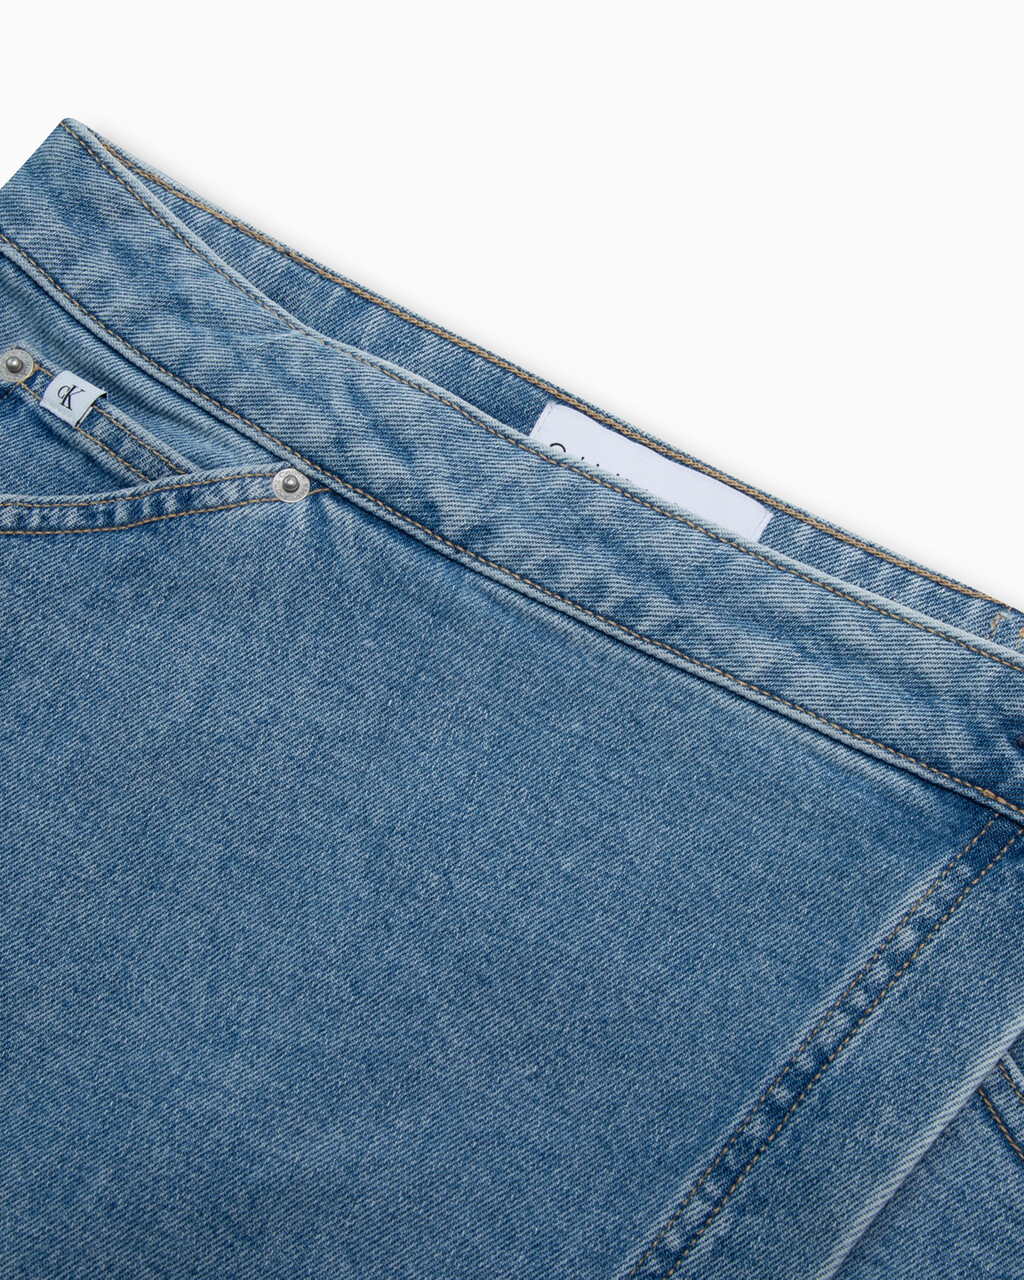 Wrapround Maxi Denim Skirt, Lgiht Blue Lg Belt, hi-res